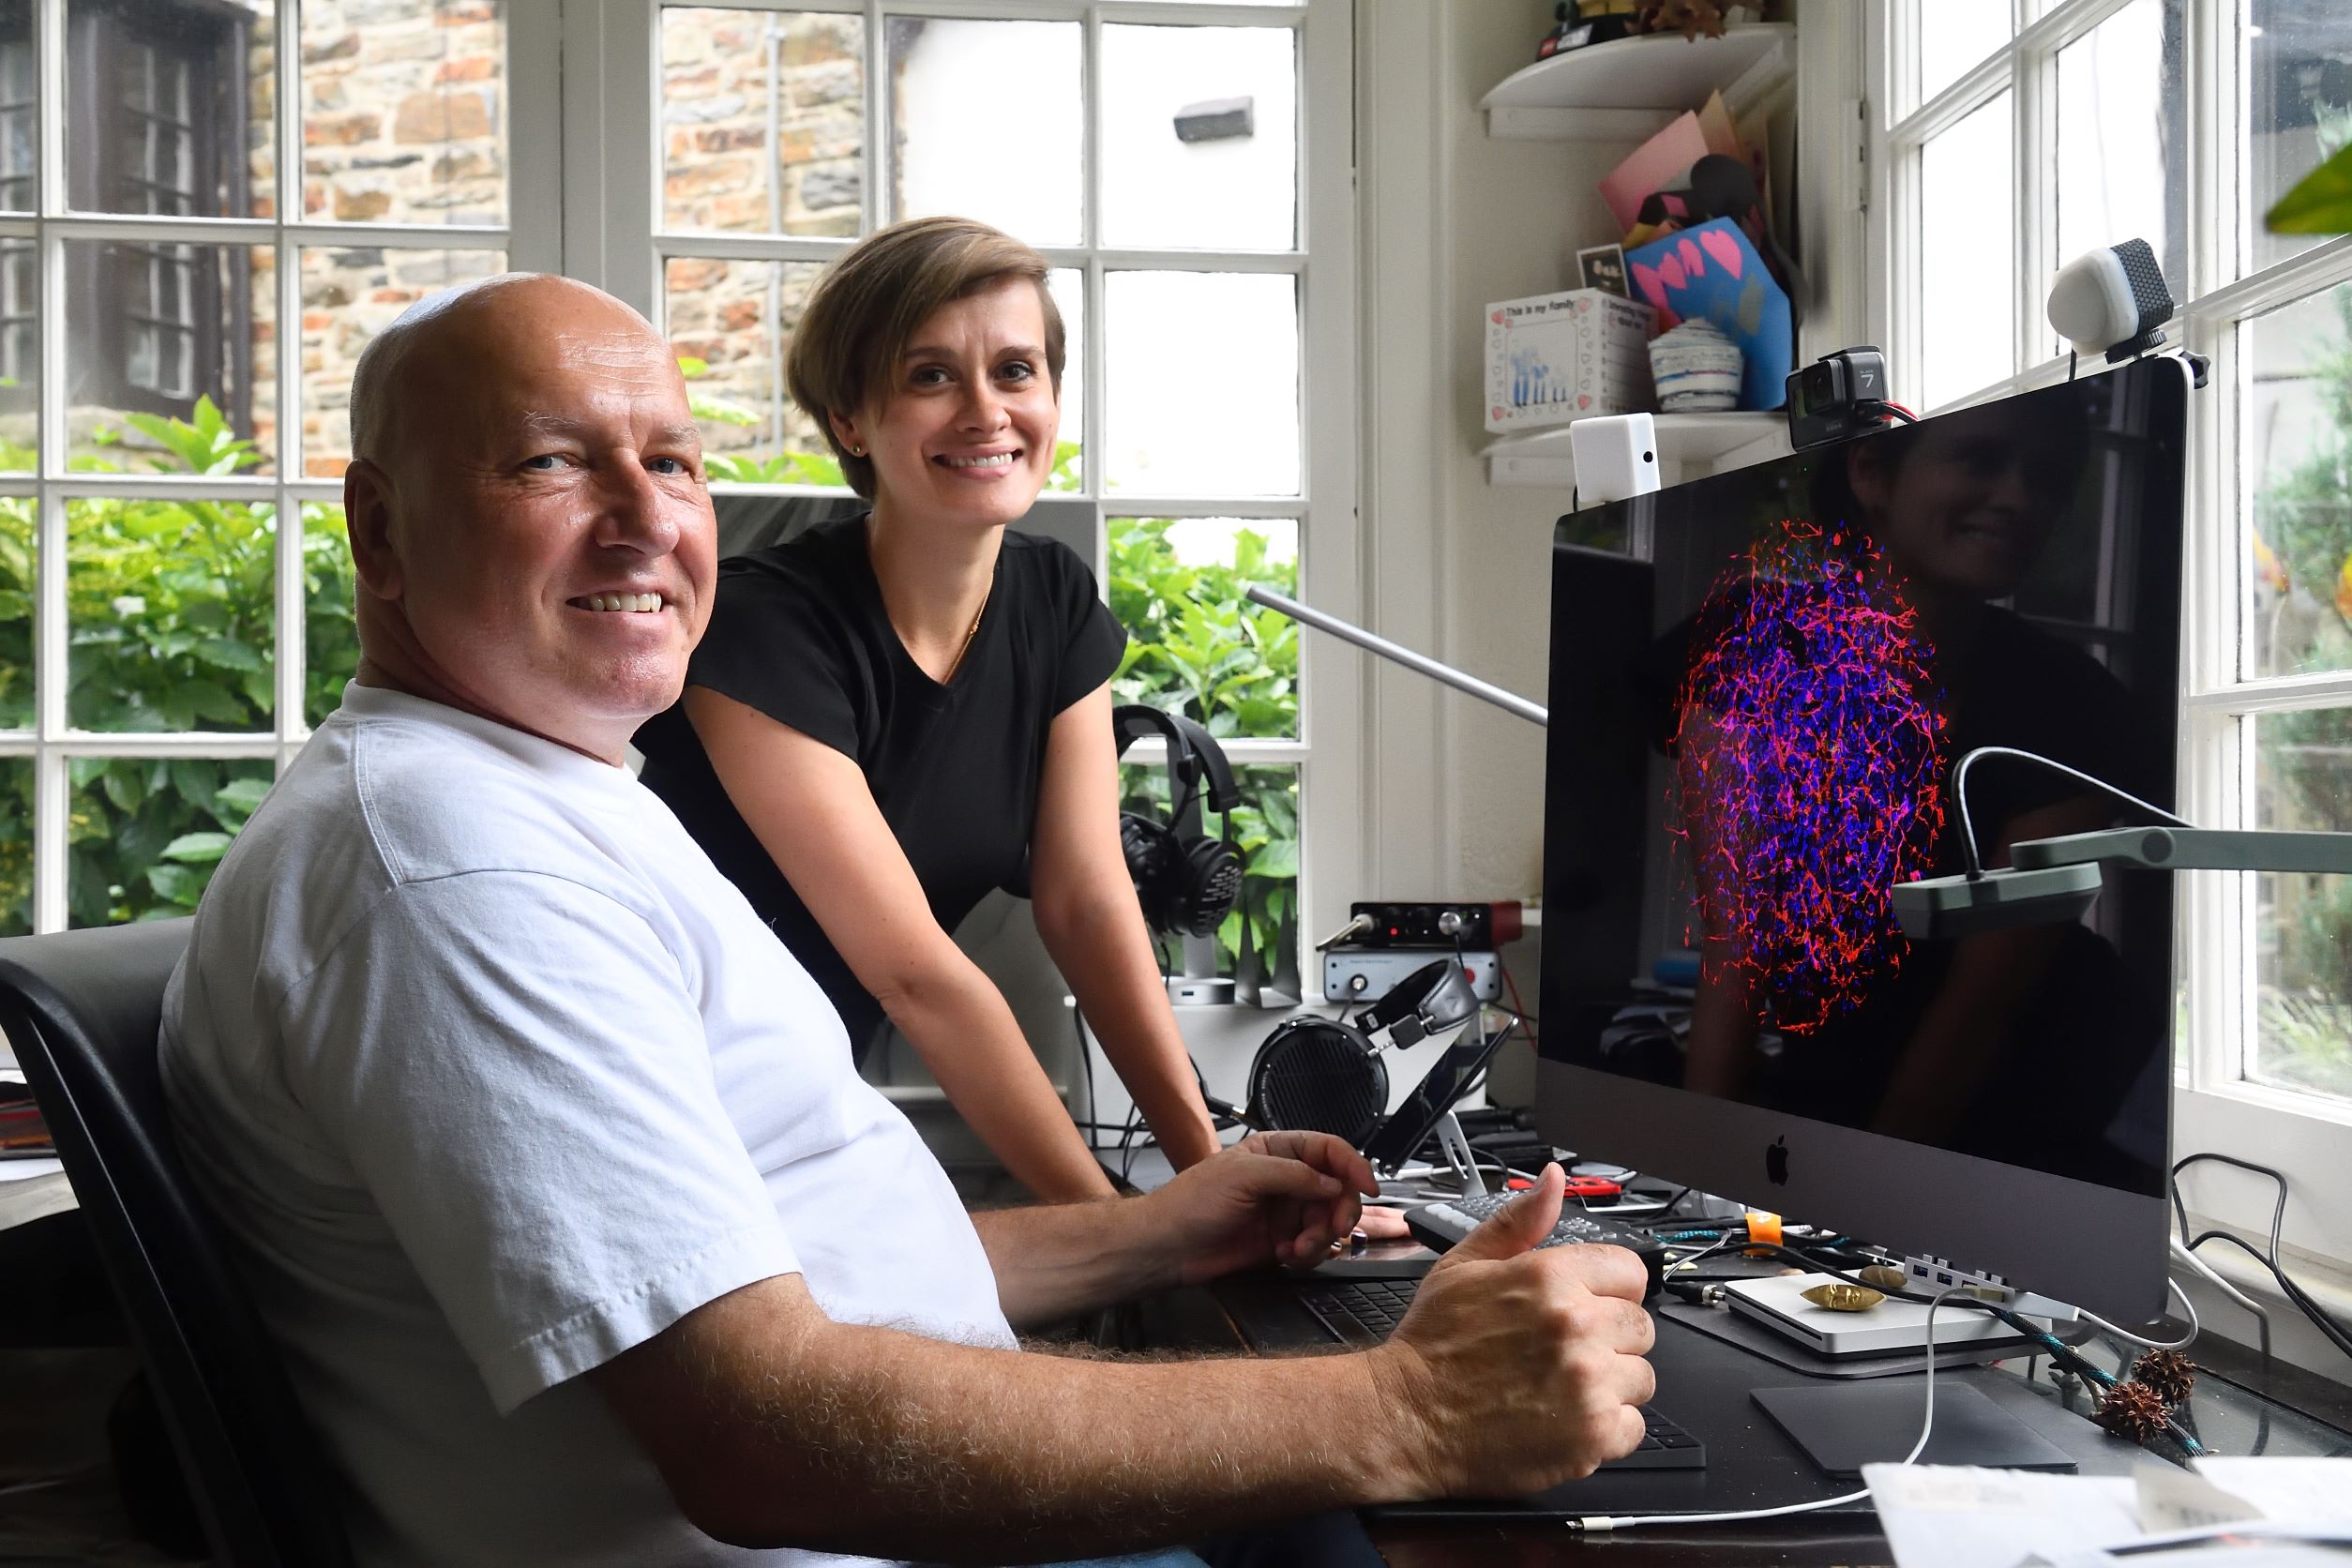 Thomas Hartung MD PhD and Lena Smirnov PhD display an organoid on the screen